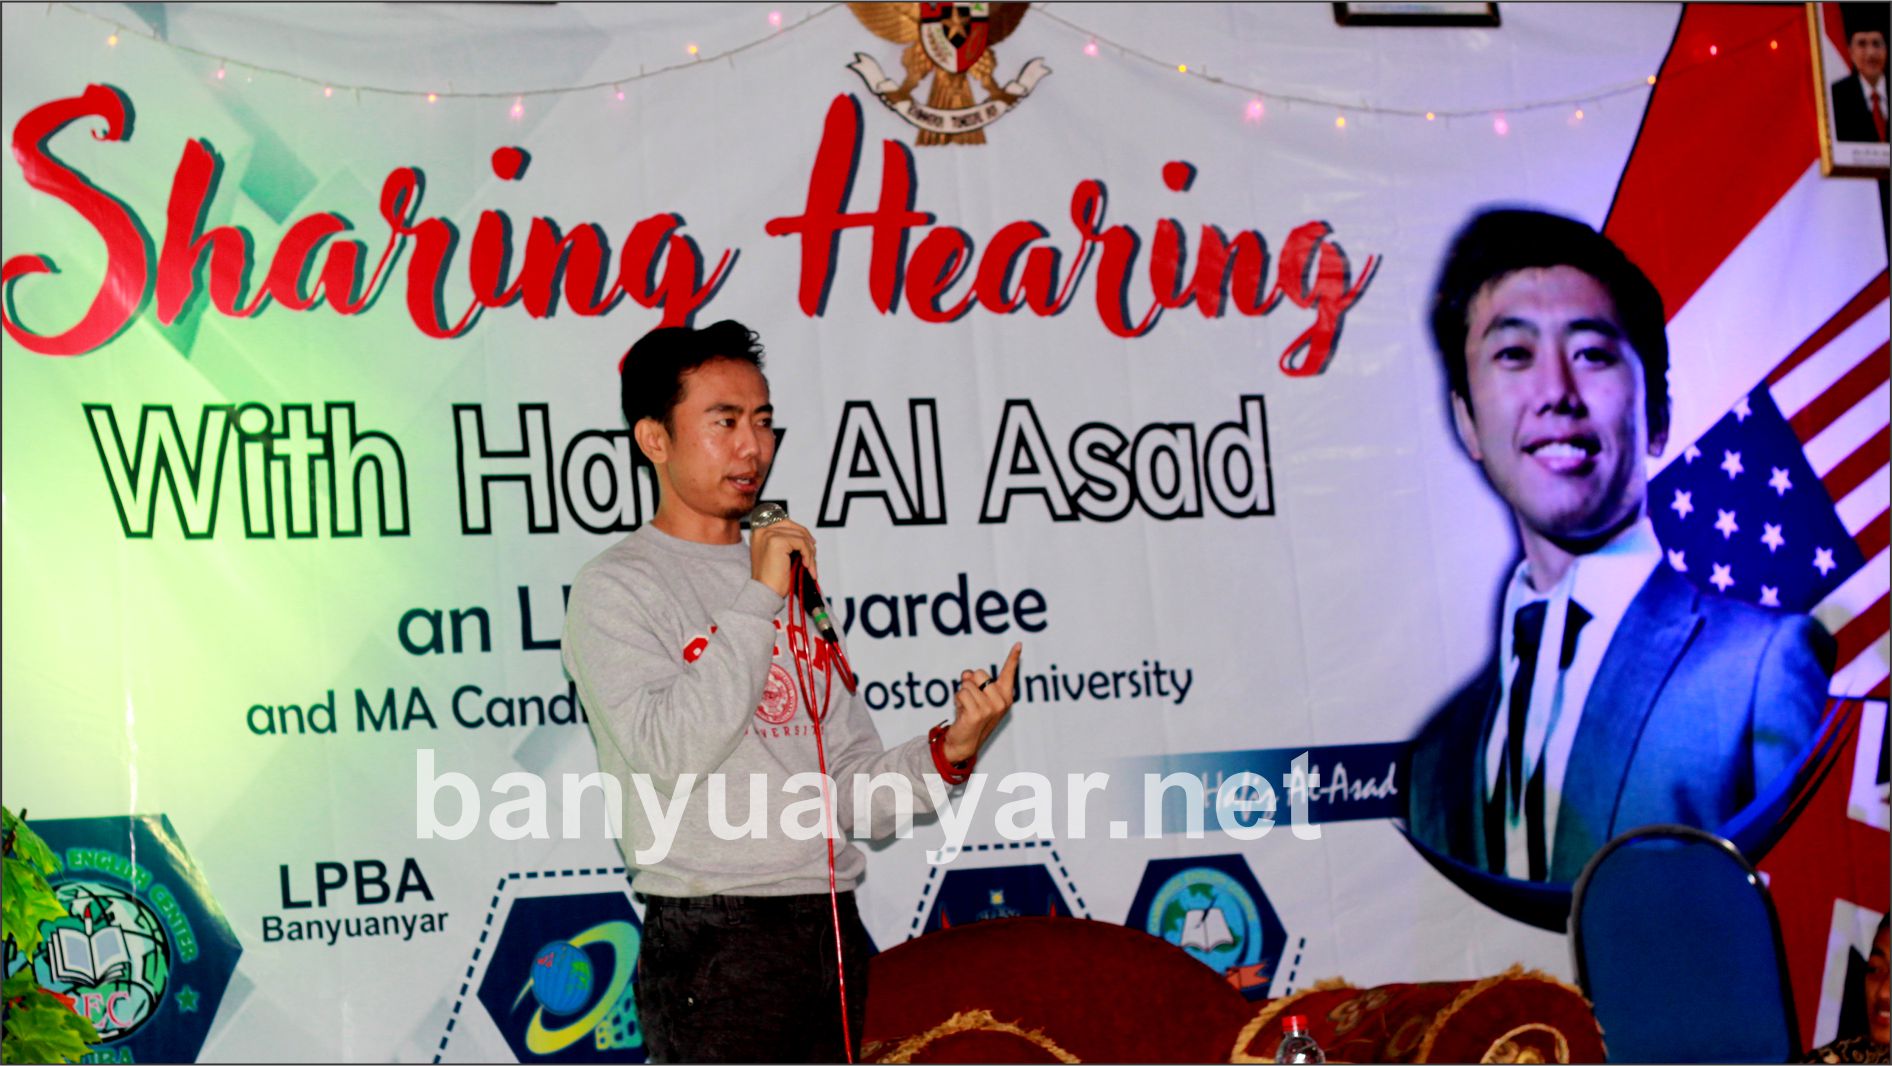 Mr. Hafiz Al Asad menjadi pembicara dalam Sharing Hearing